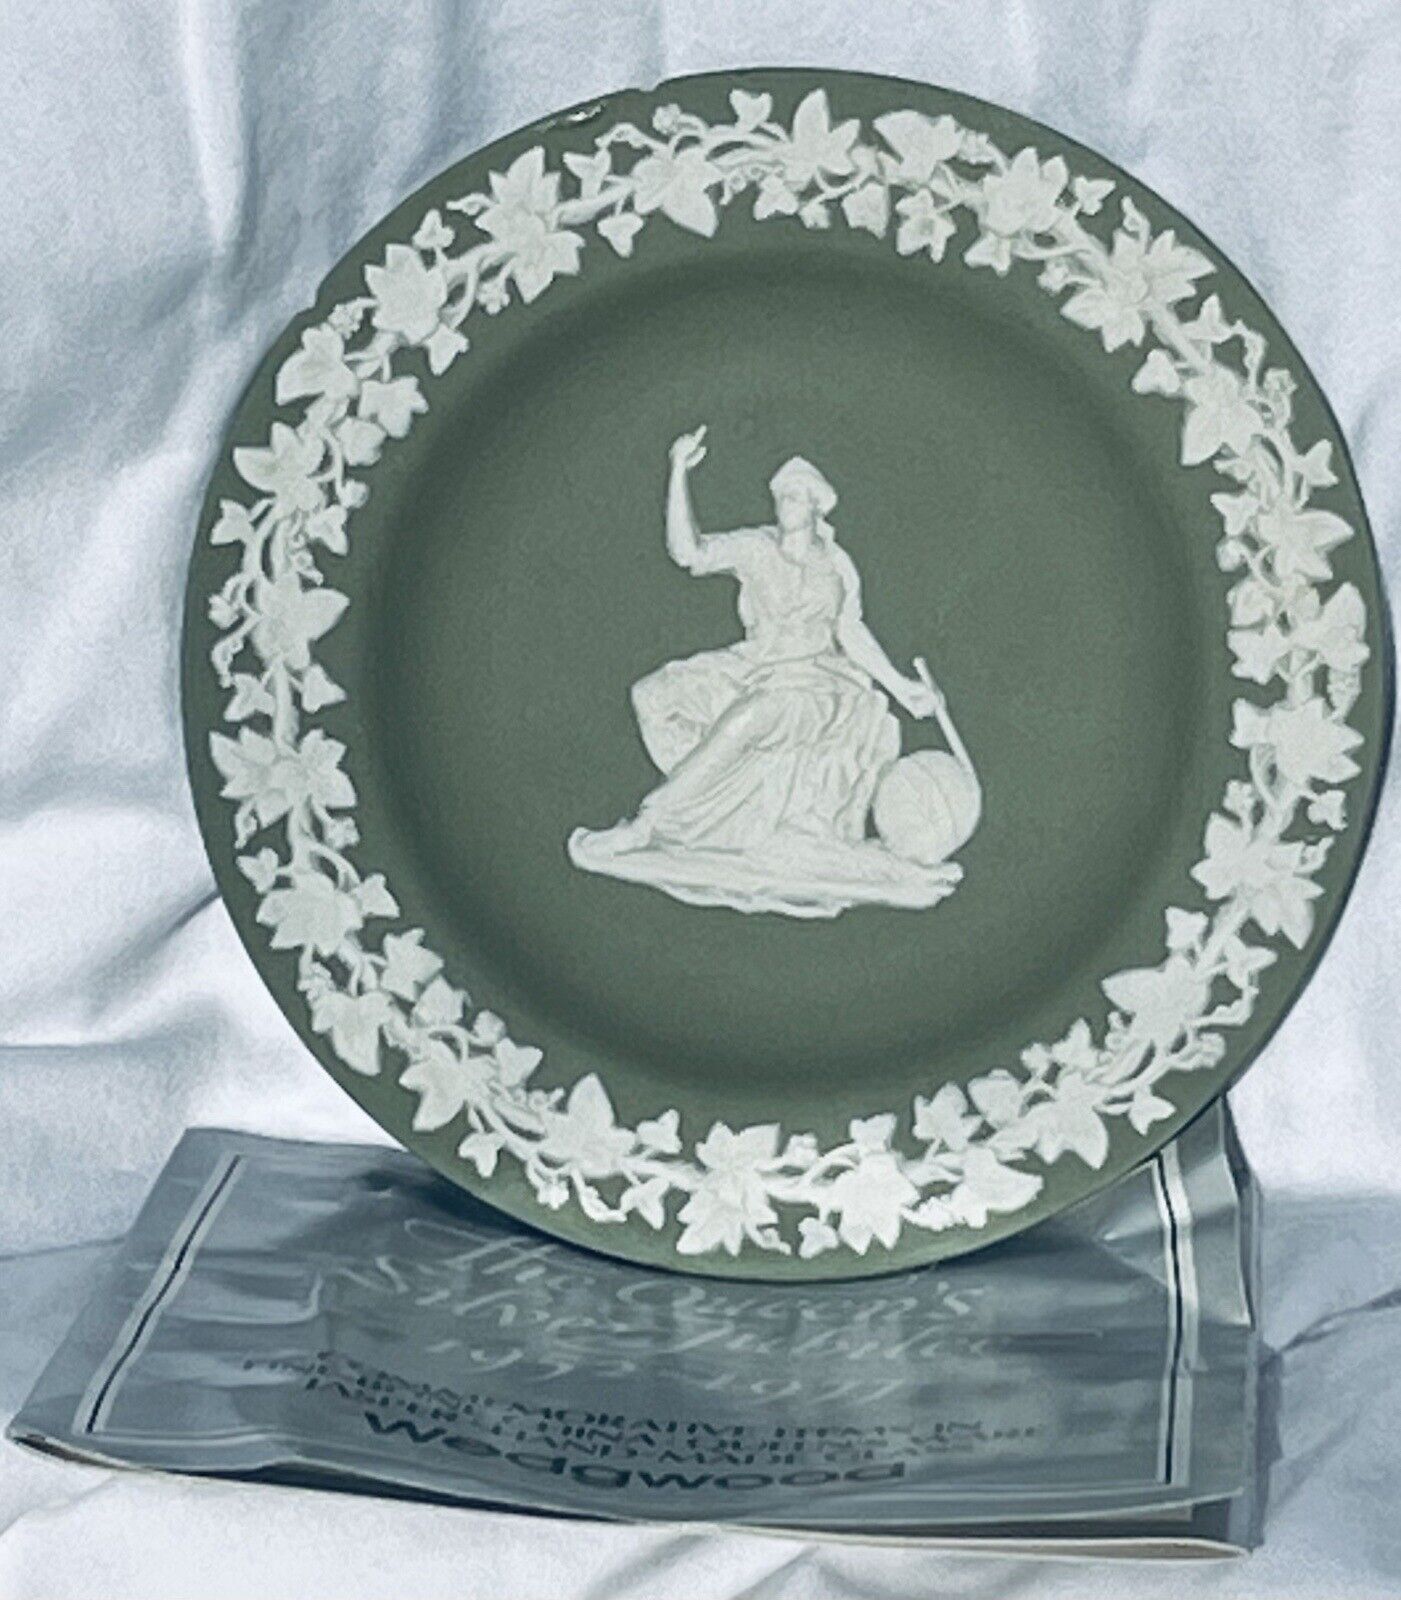 BTG Royal Wedgwood White on Sage Green Jasperware Sweet Plate. Made In England